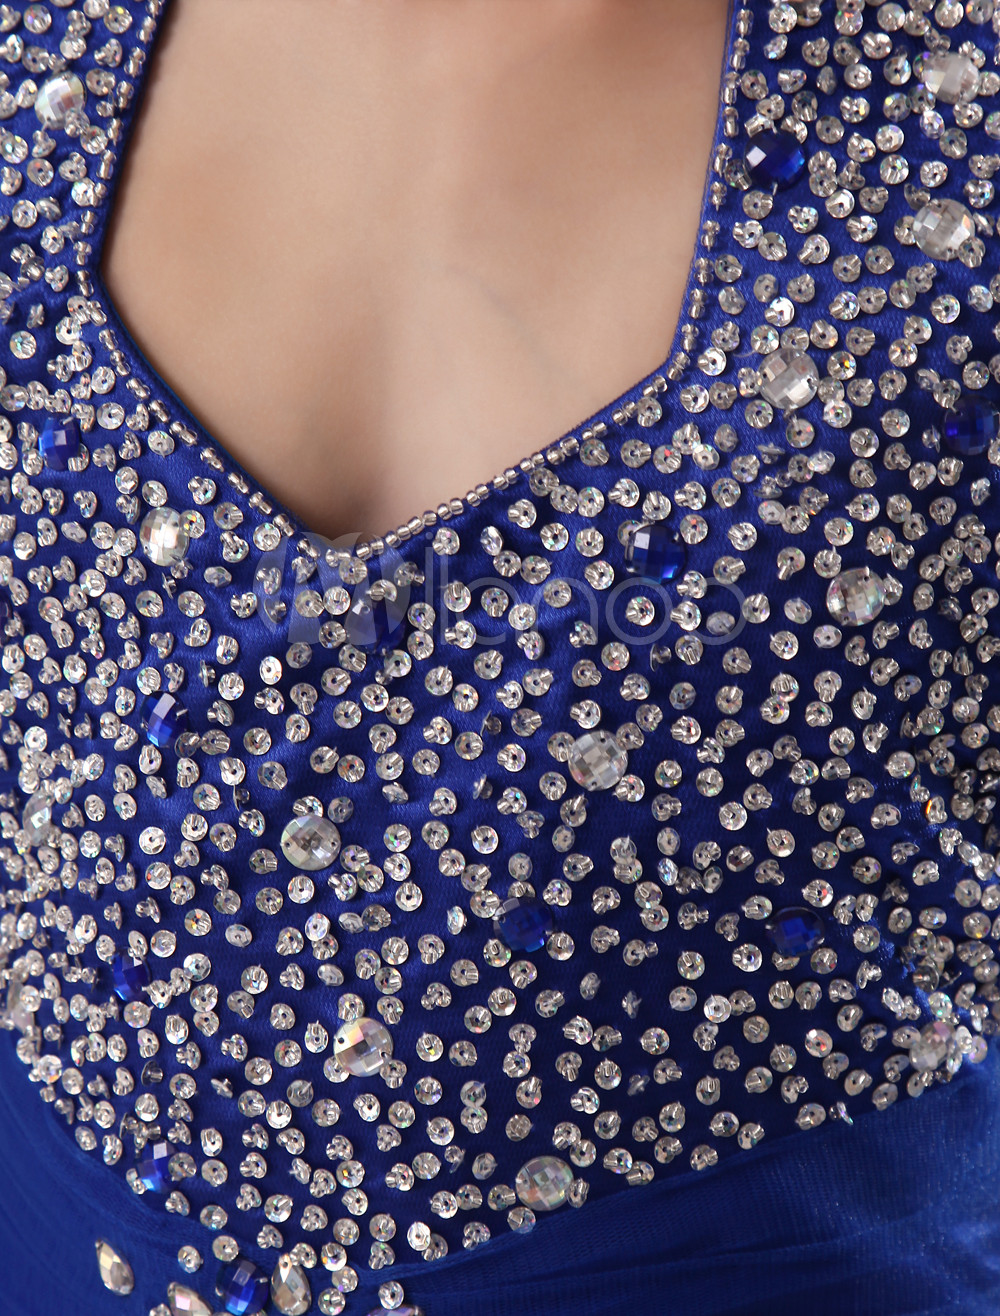 Royal Blue Halter Sequin Flower Girl Dress - Milanoo.com